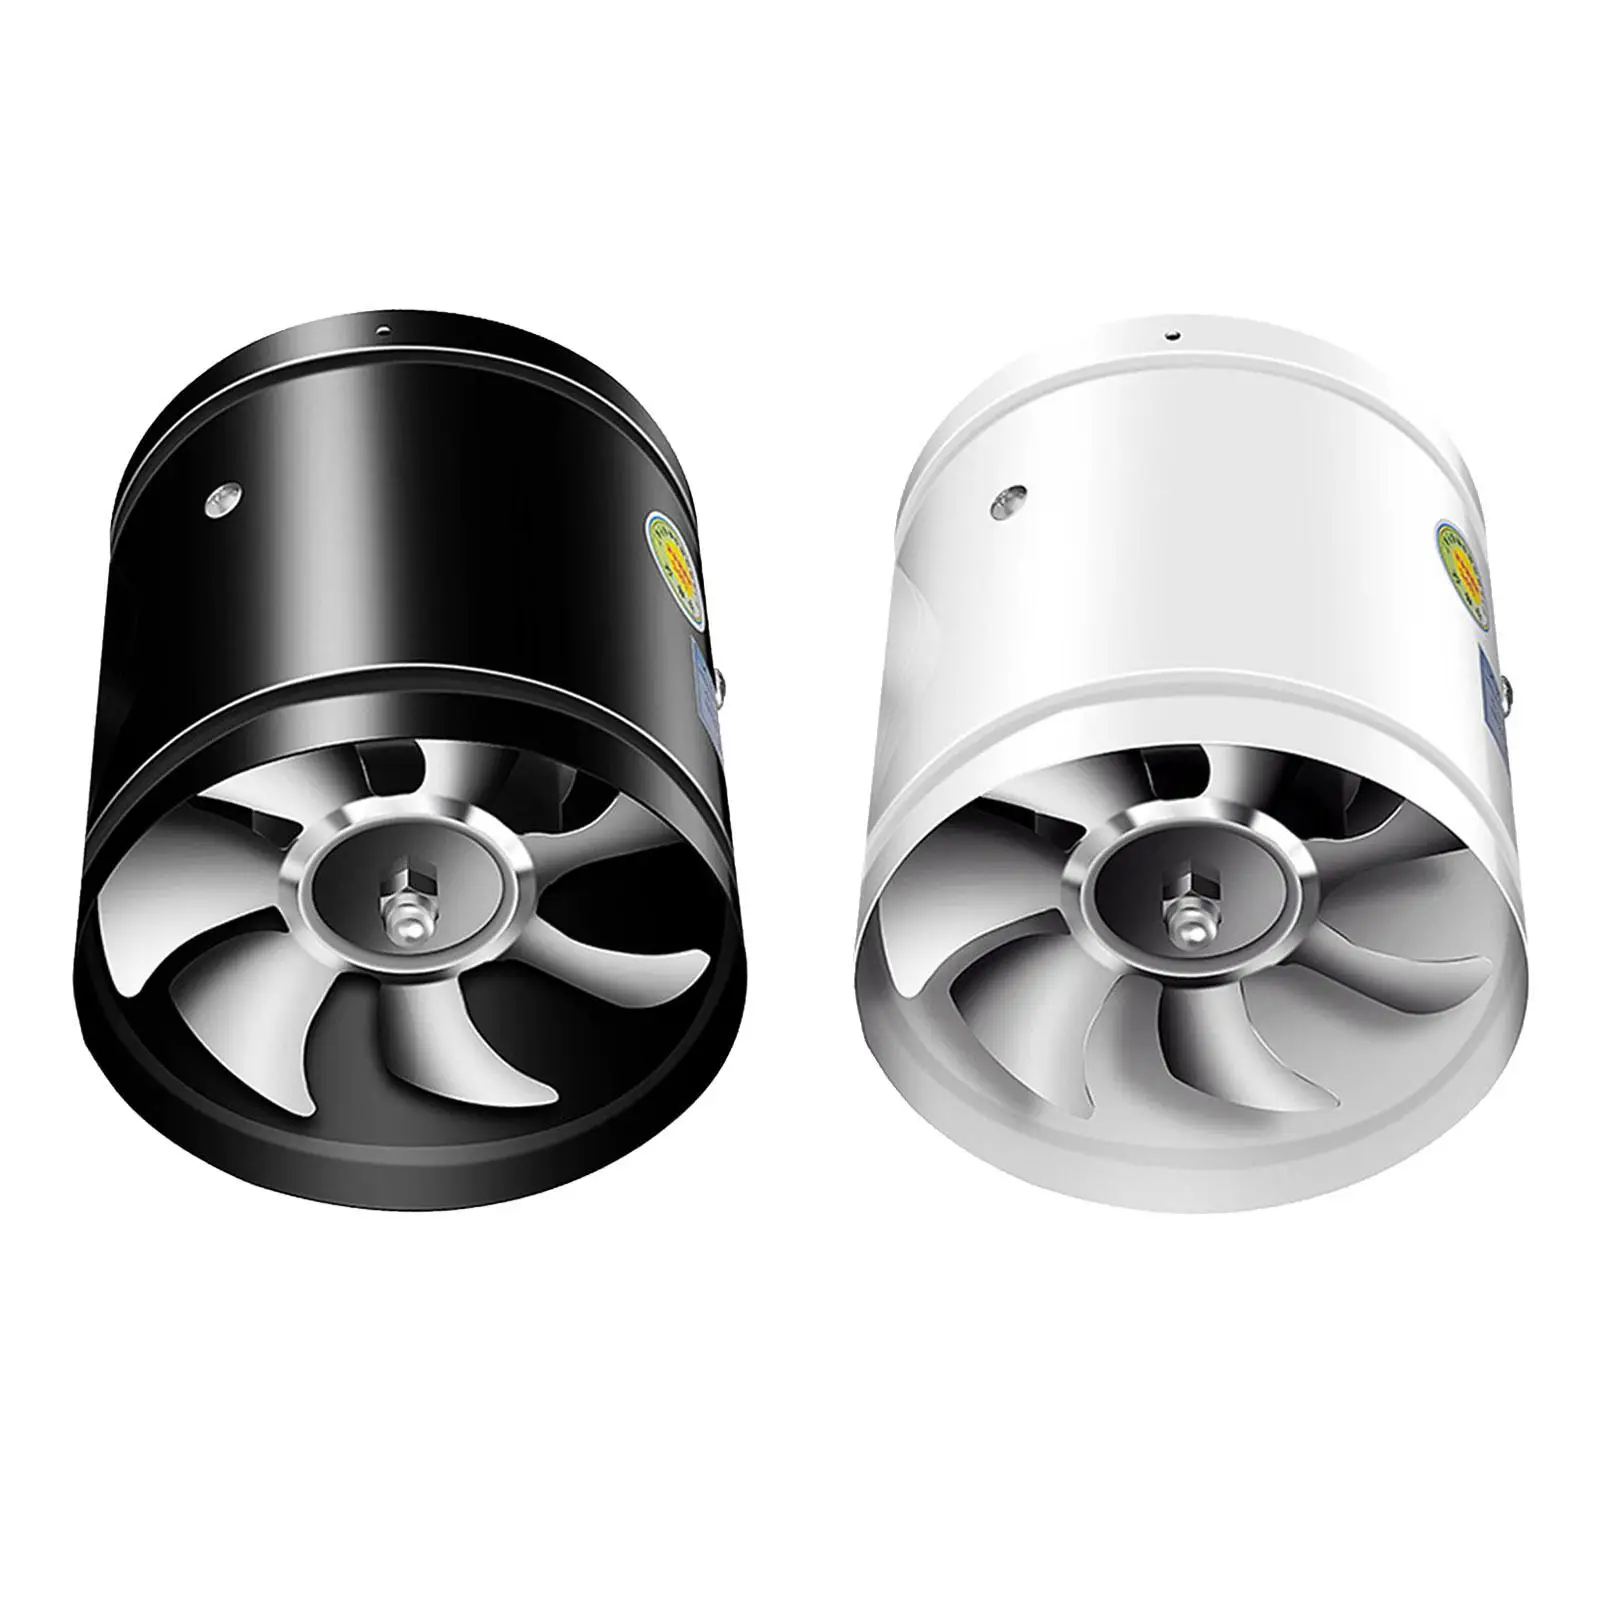 Pipe Exhaust Fan Air Ventilation Blower Ventilation Fan Vent Blower for Bar Wall